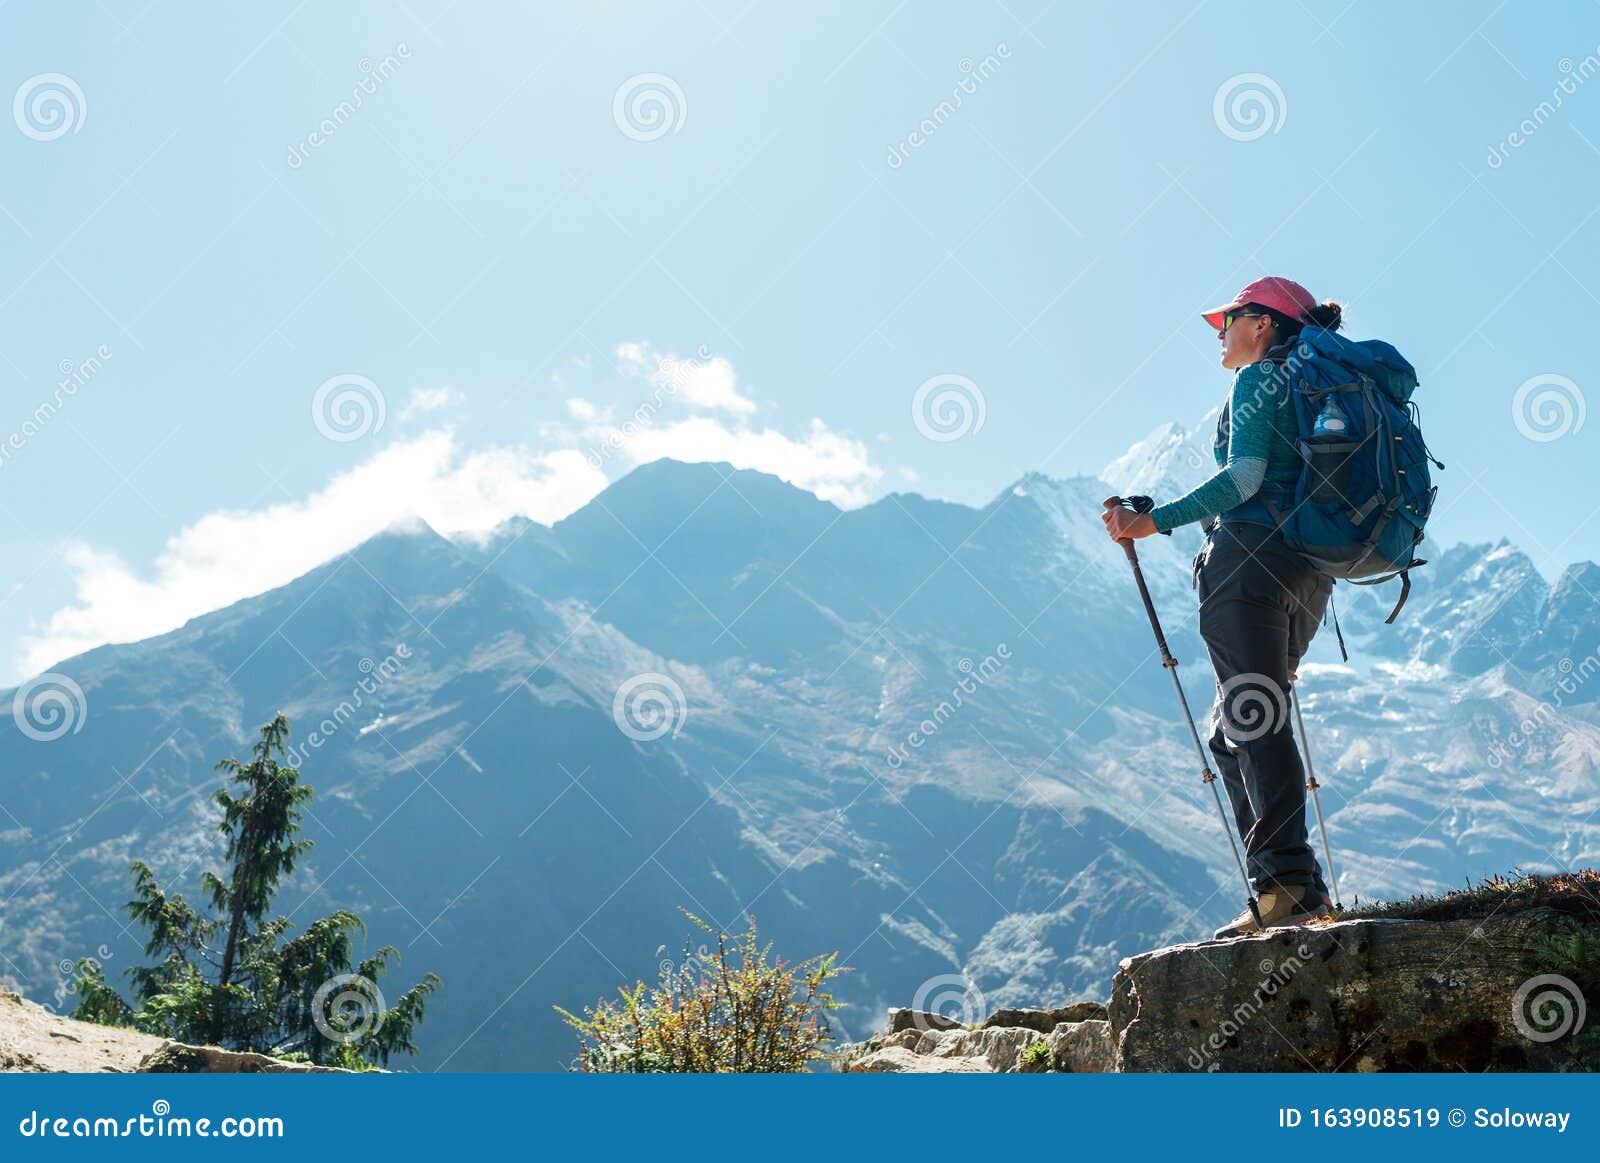 young hiker backpacker female using trekking poles enjoying mountain view during high altitude acclimatization walk. everest base